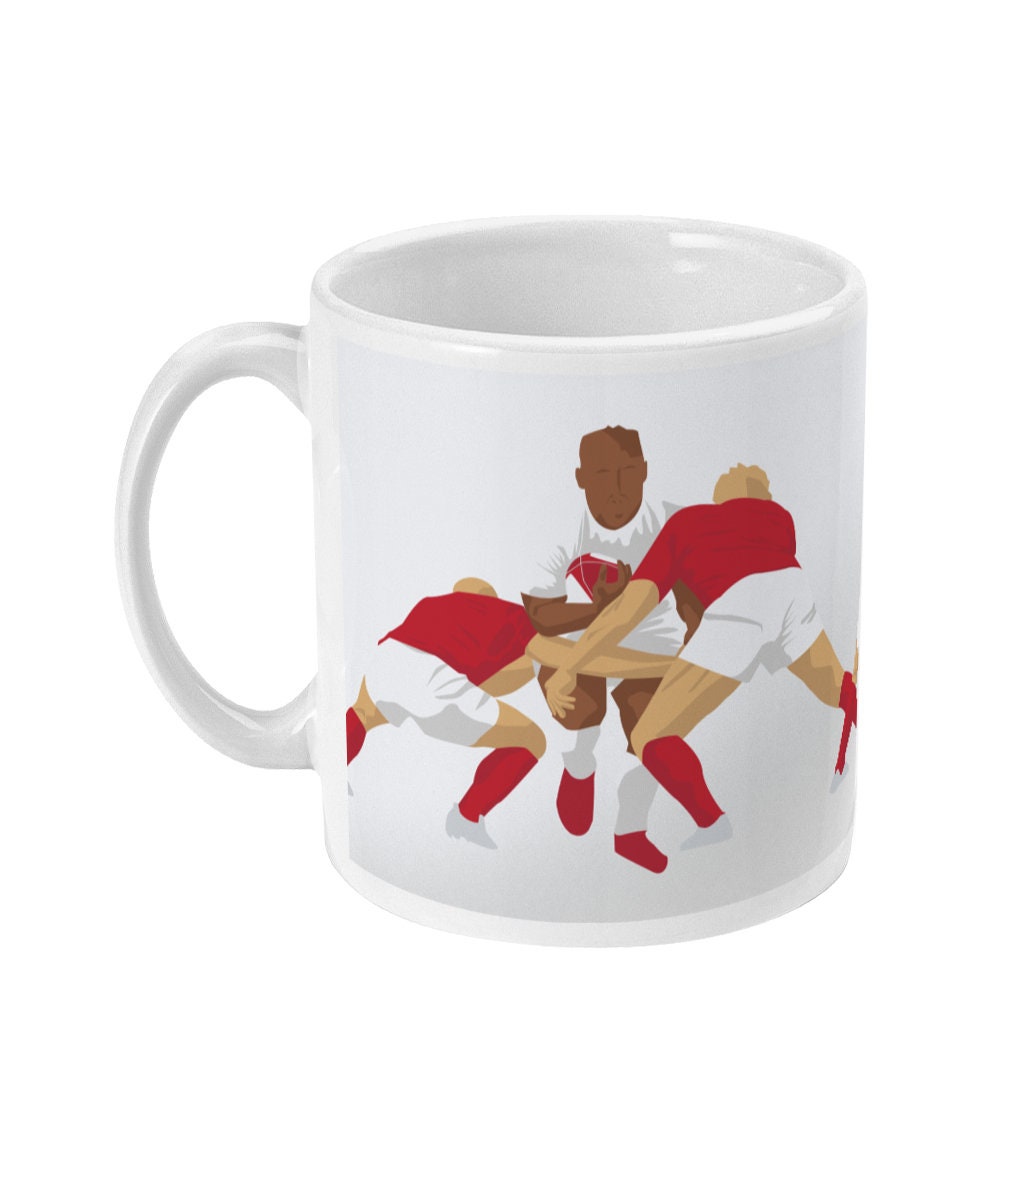 Tasse ou mug "Rugby Biarritz" - Personnalisable